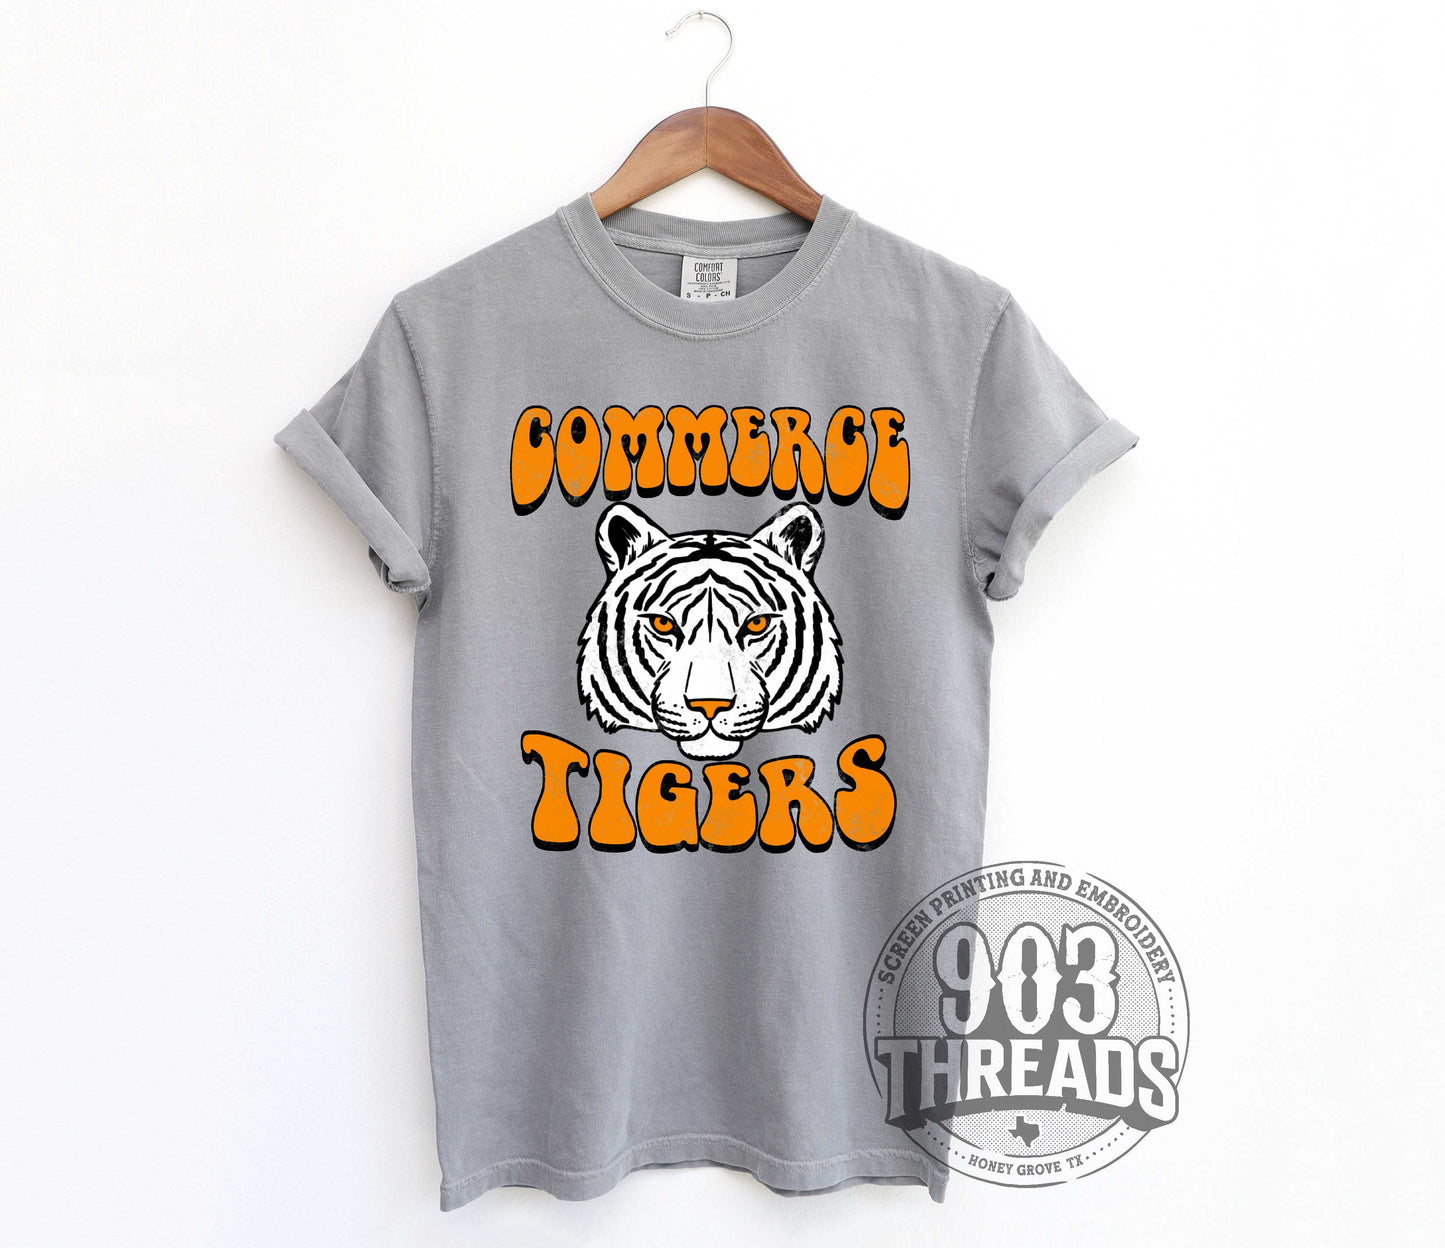 Commerce Tigers - Old School Mascot